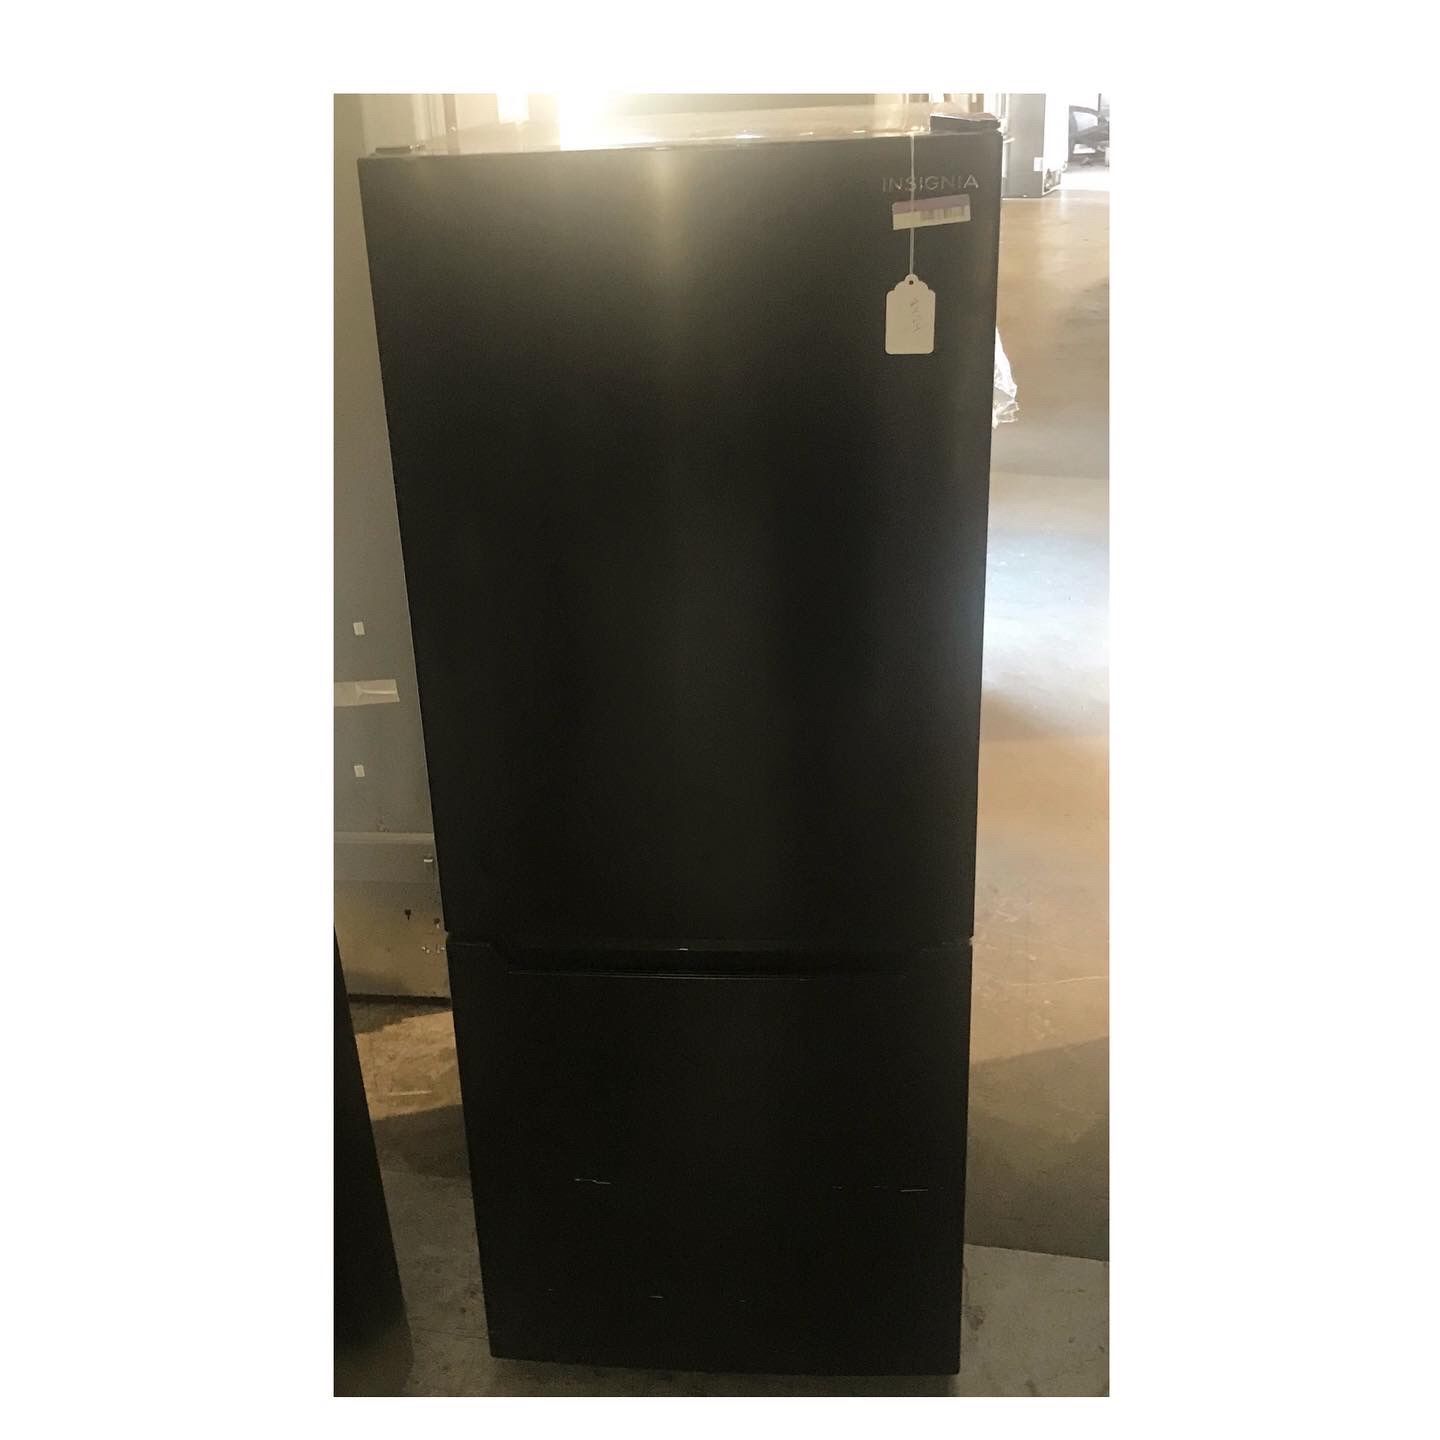 Insignia Refrigerator with Bottom Freezer